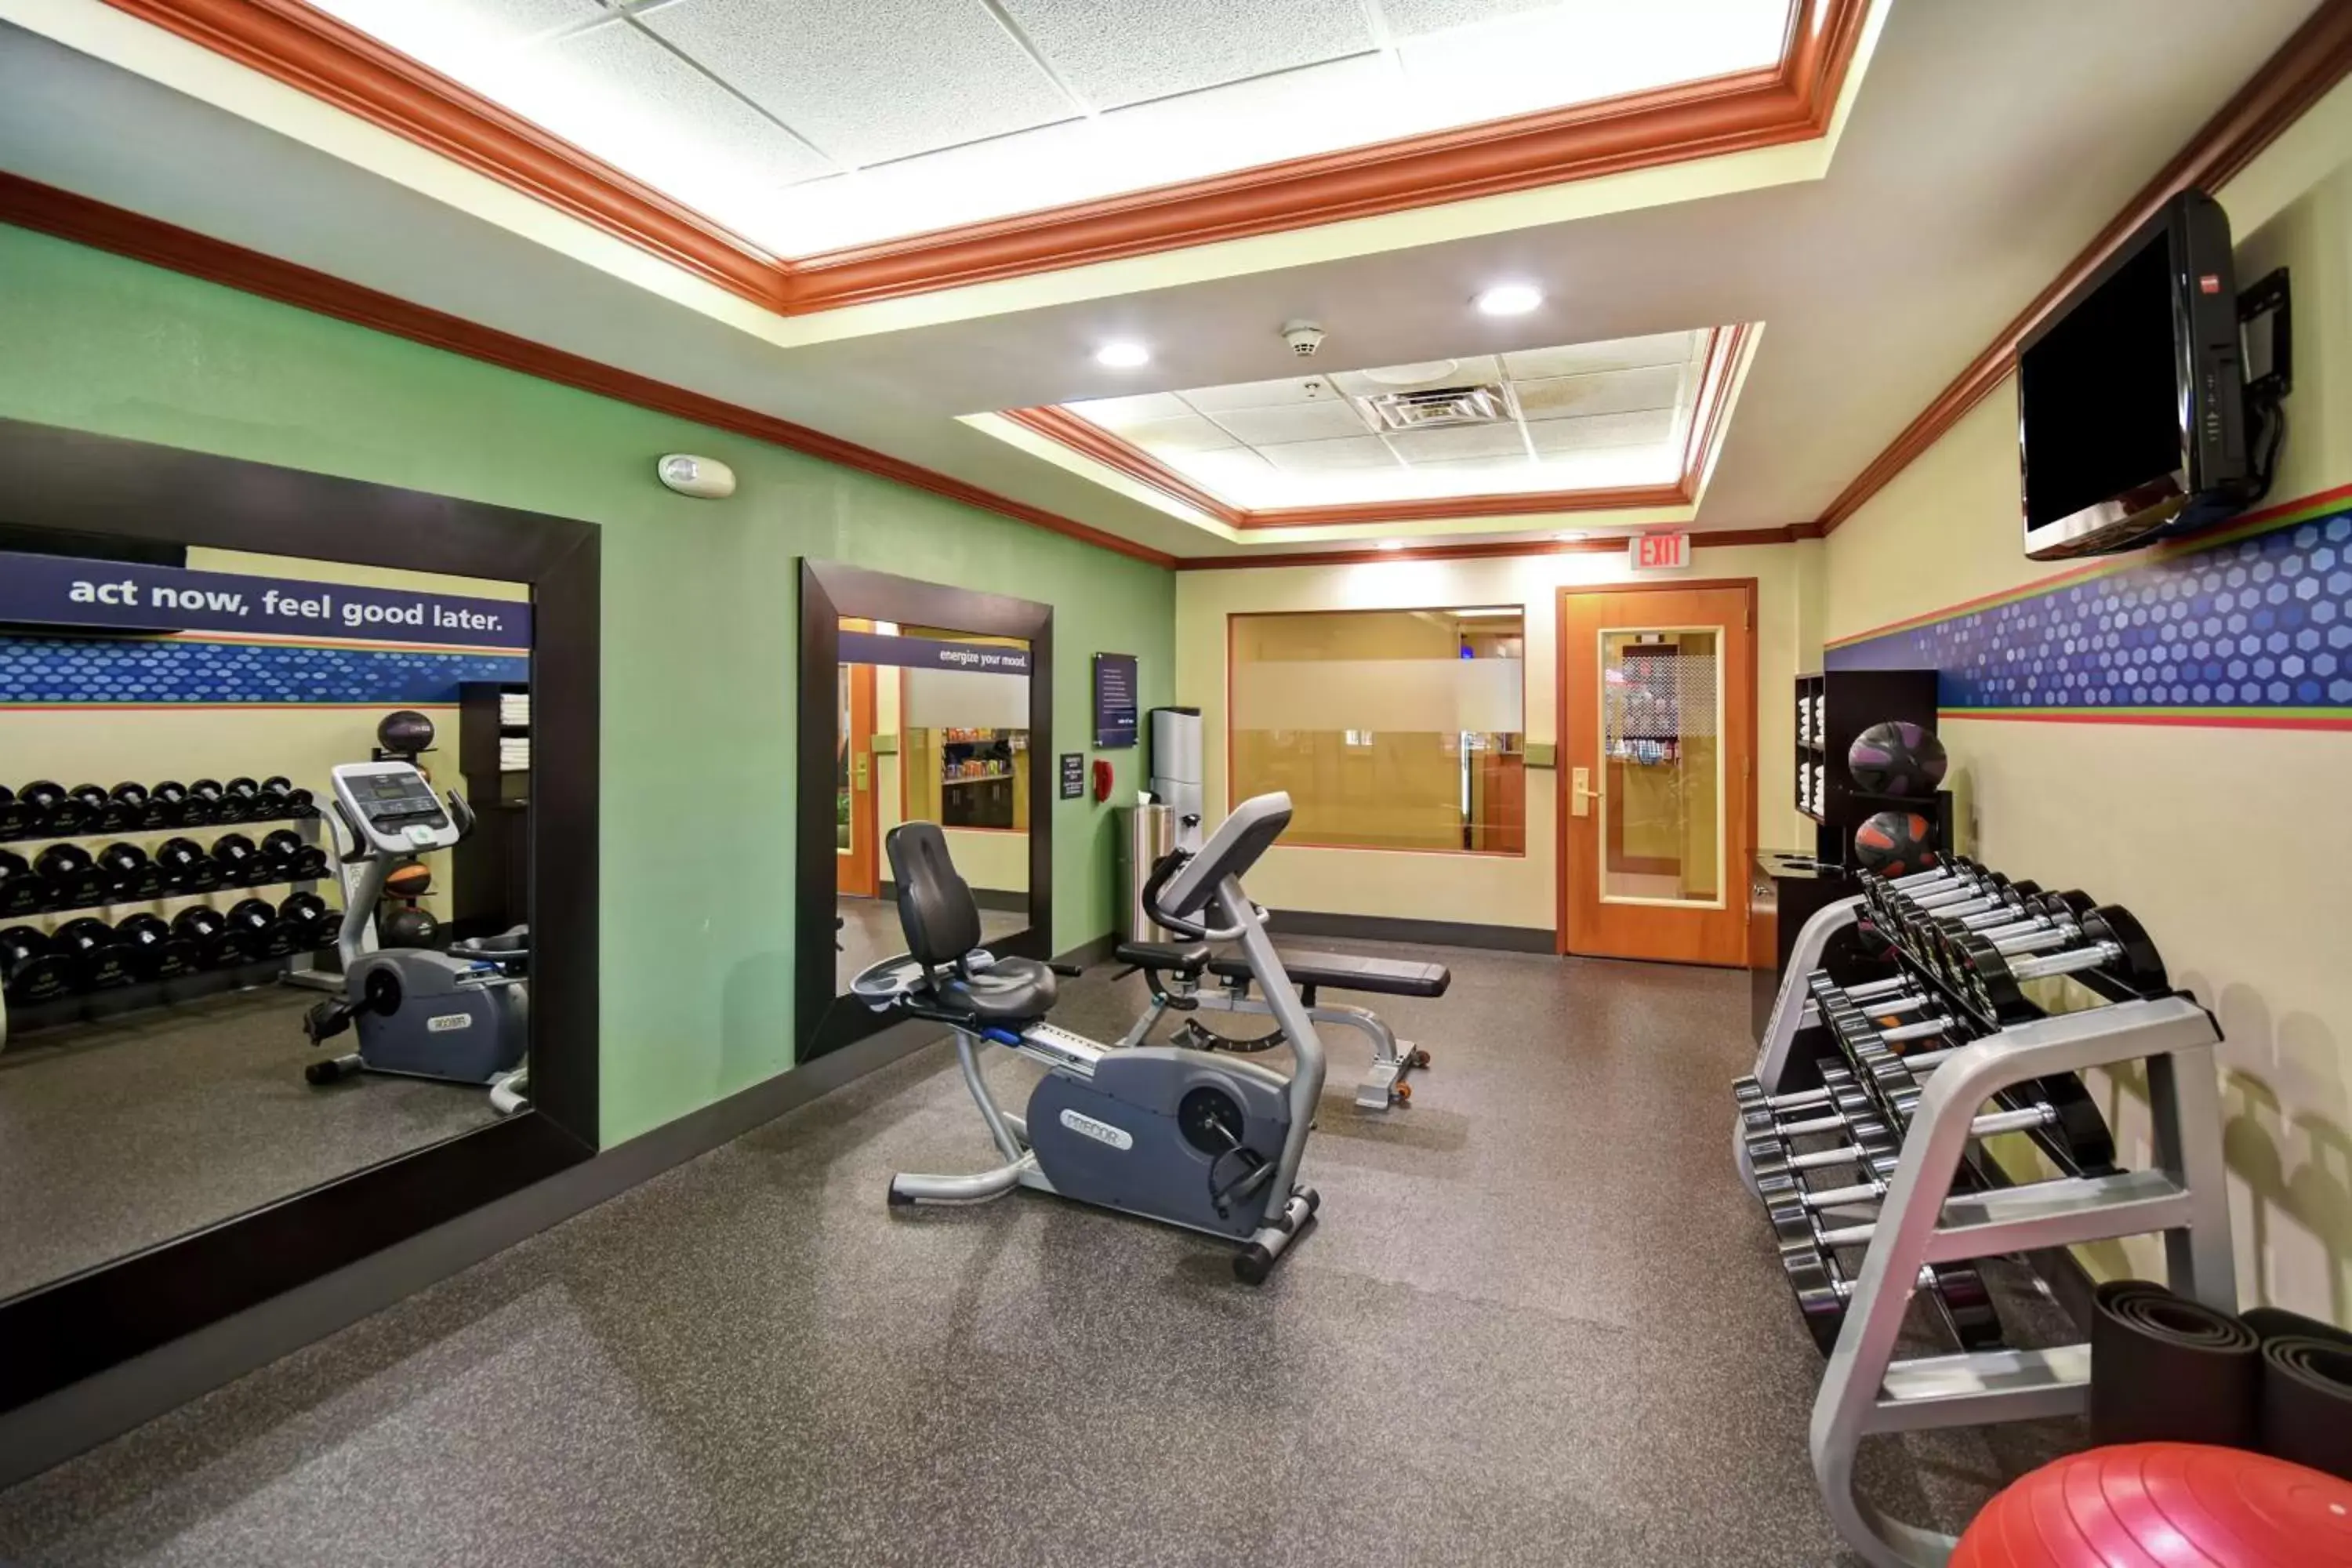 Fitness centre/facilities, Fitness Center/Facilities in Hampton Inn Chicopee - Springfield